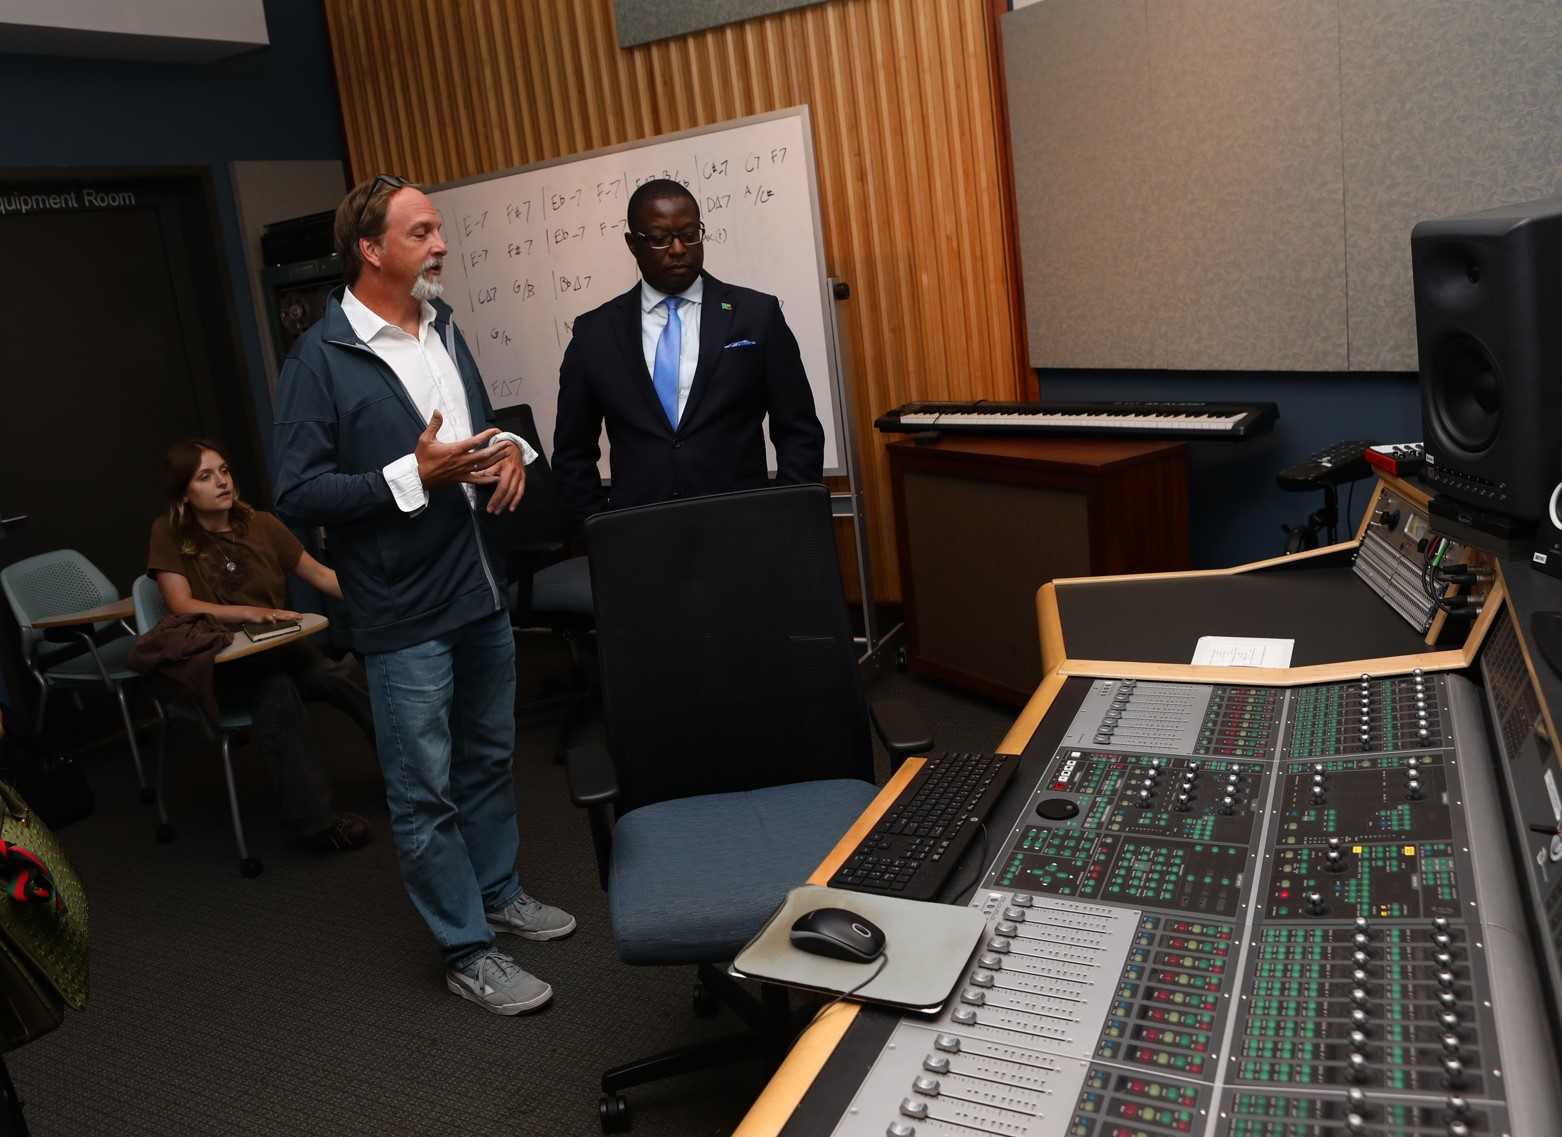 H. E. Ambassador Dr. Chola Milambo in the School of Music Recording Studio with Professor Sten Isachsen